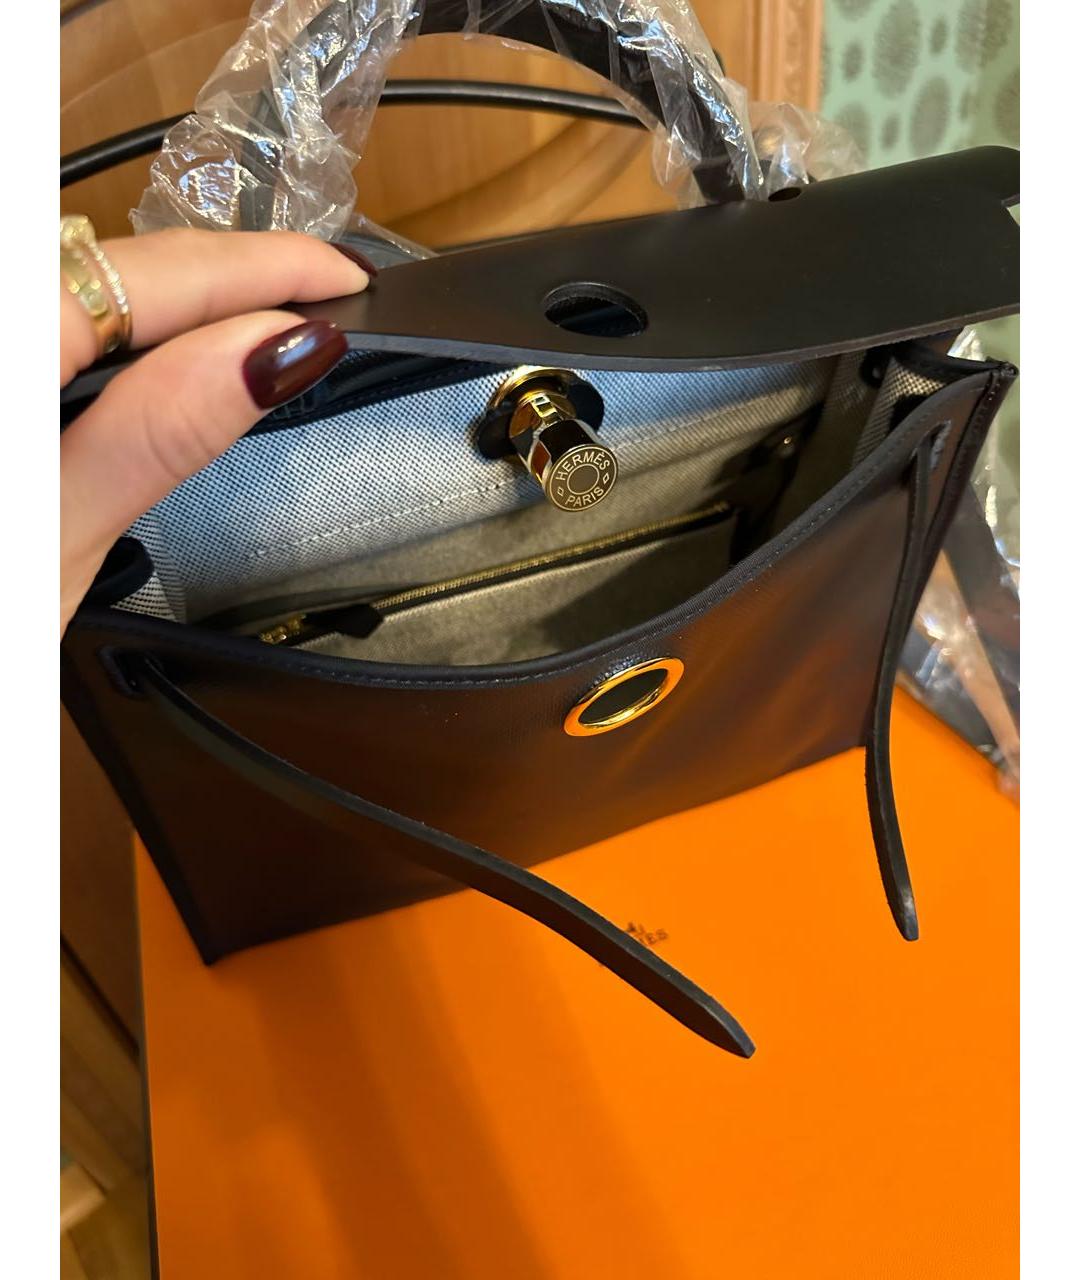 Hermès Birkin Handbag 398882